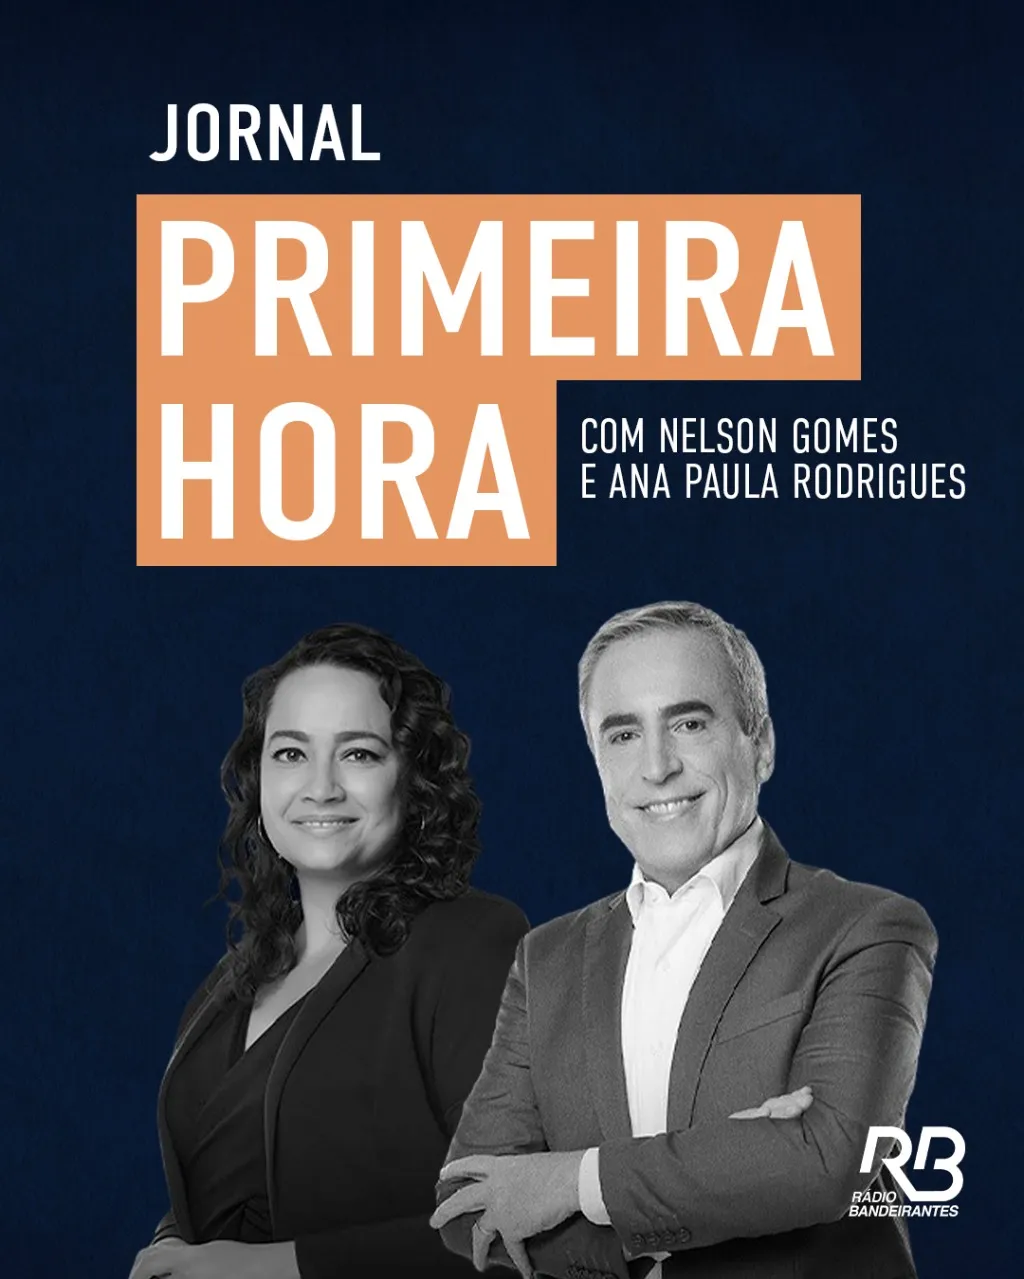 JORNAL PRIMEIRA HORA